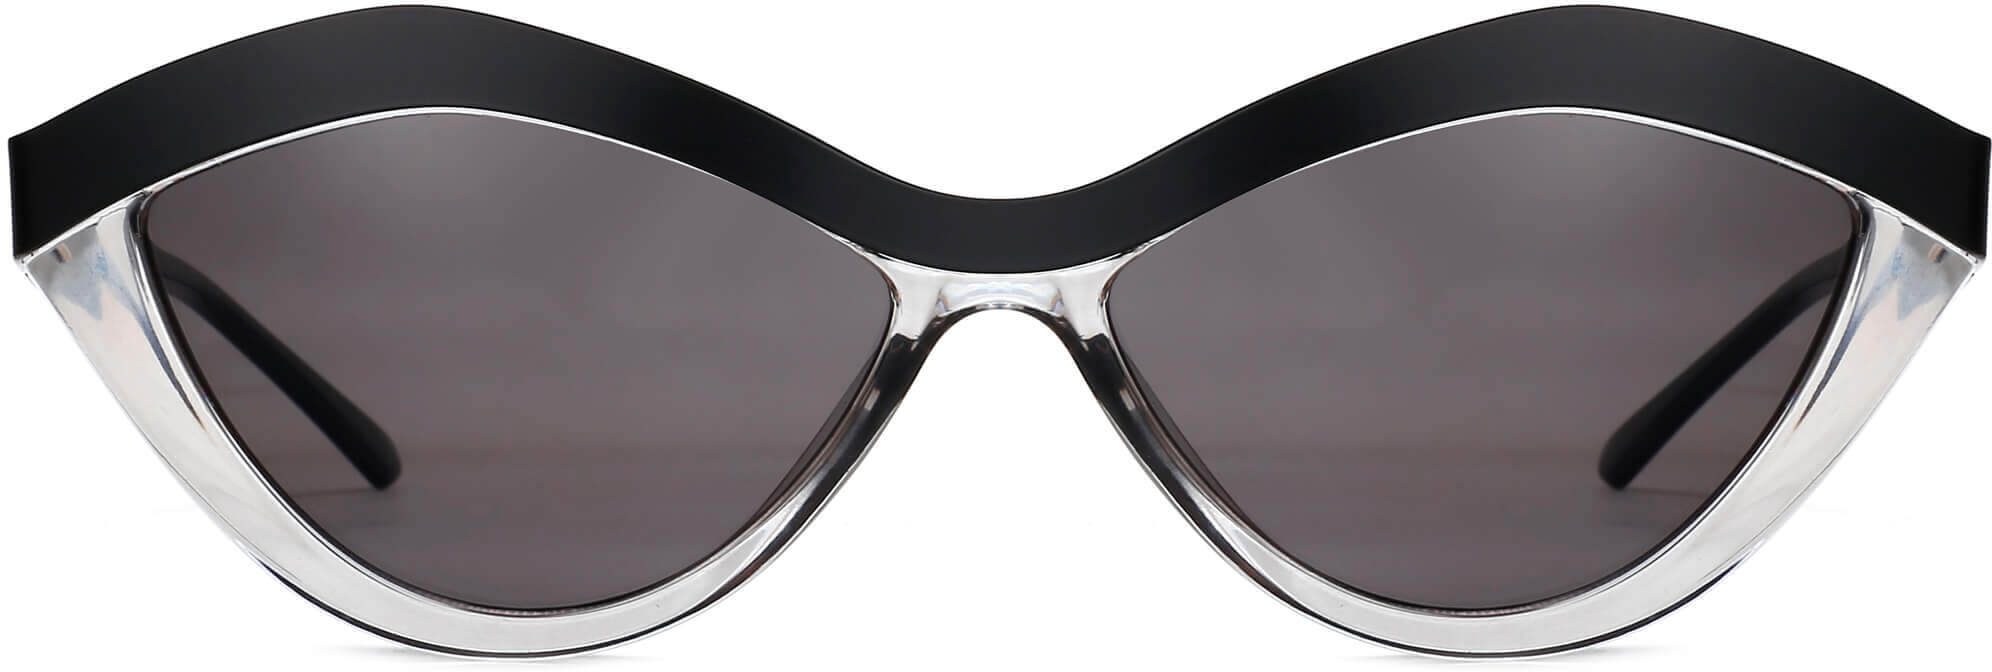 Layla Black Clear Plastic Sunglasses from ANRRI